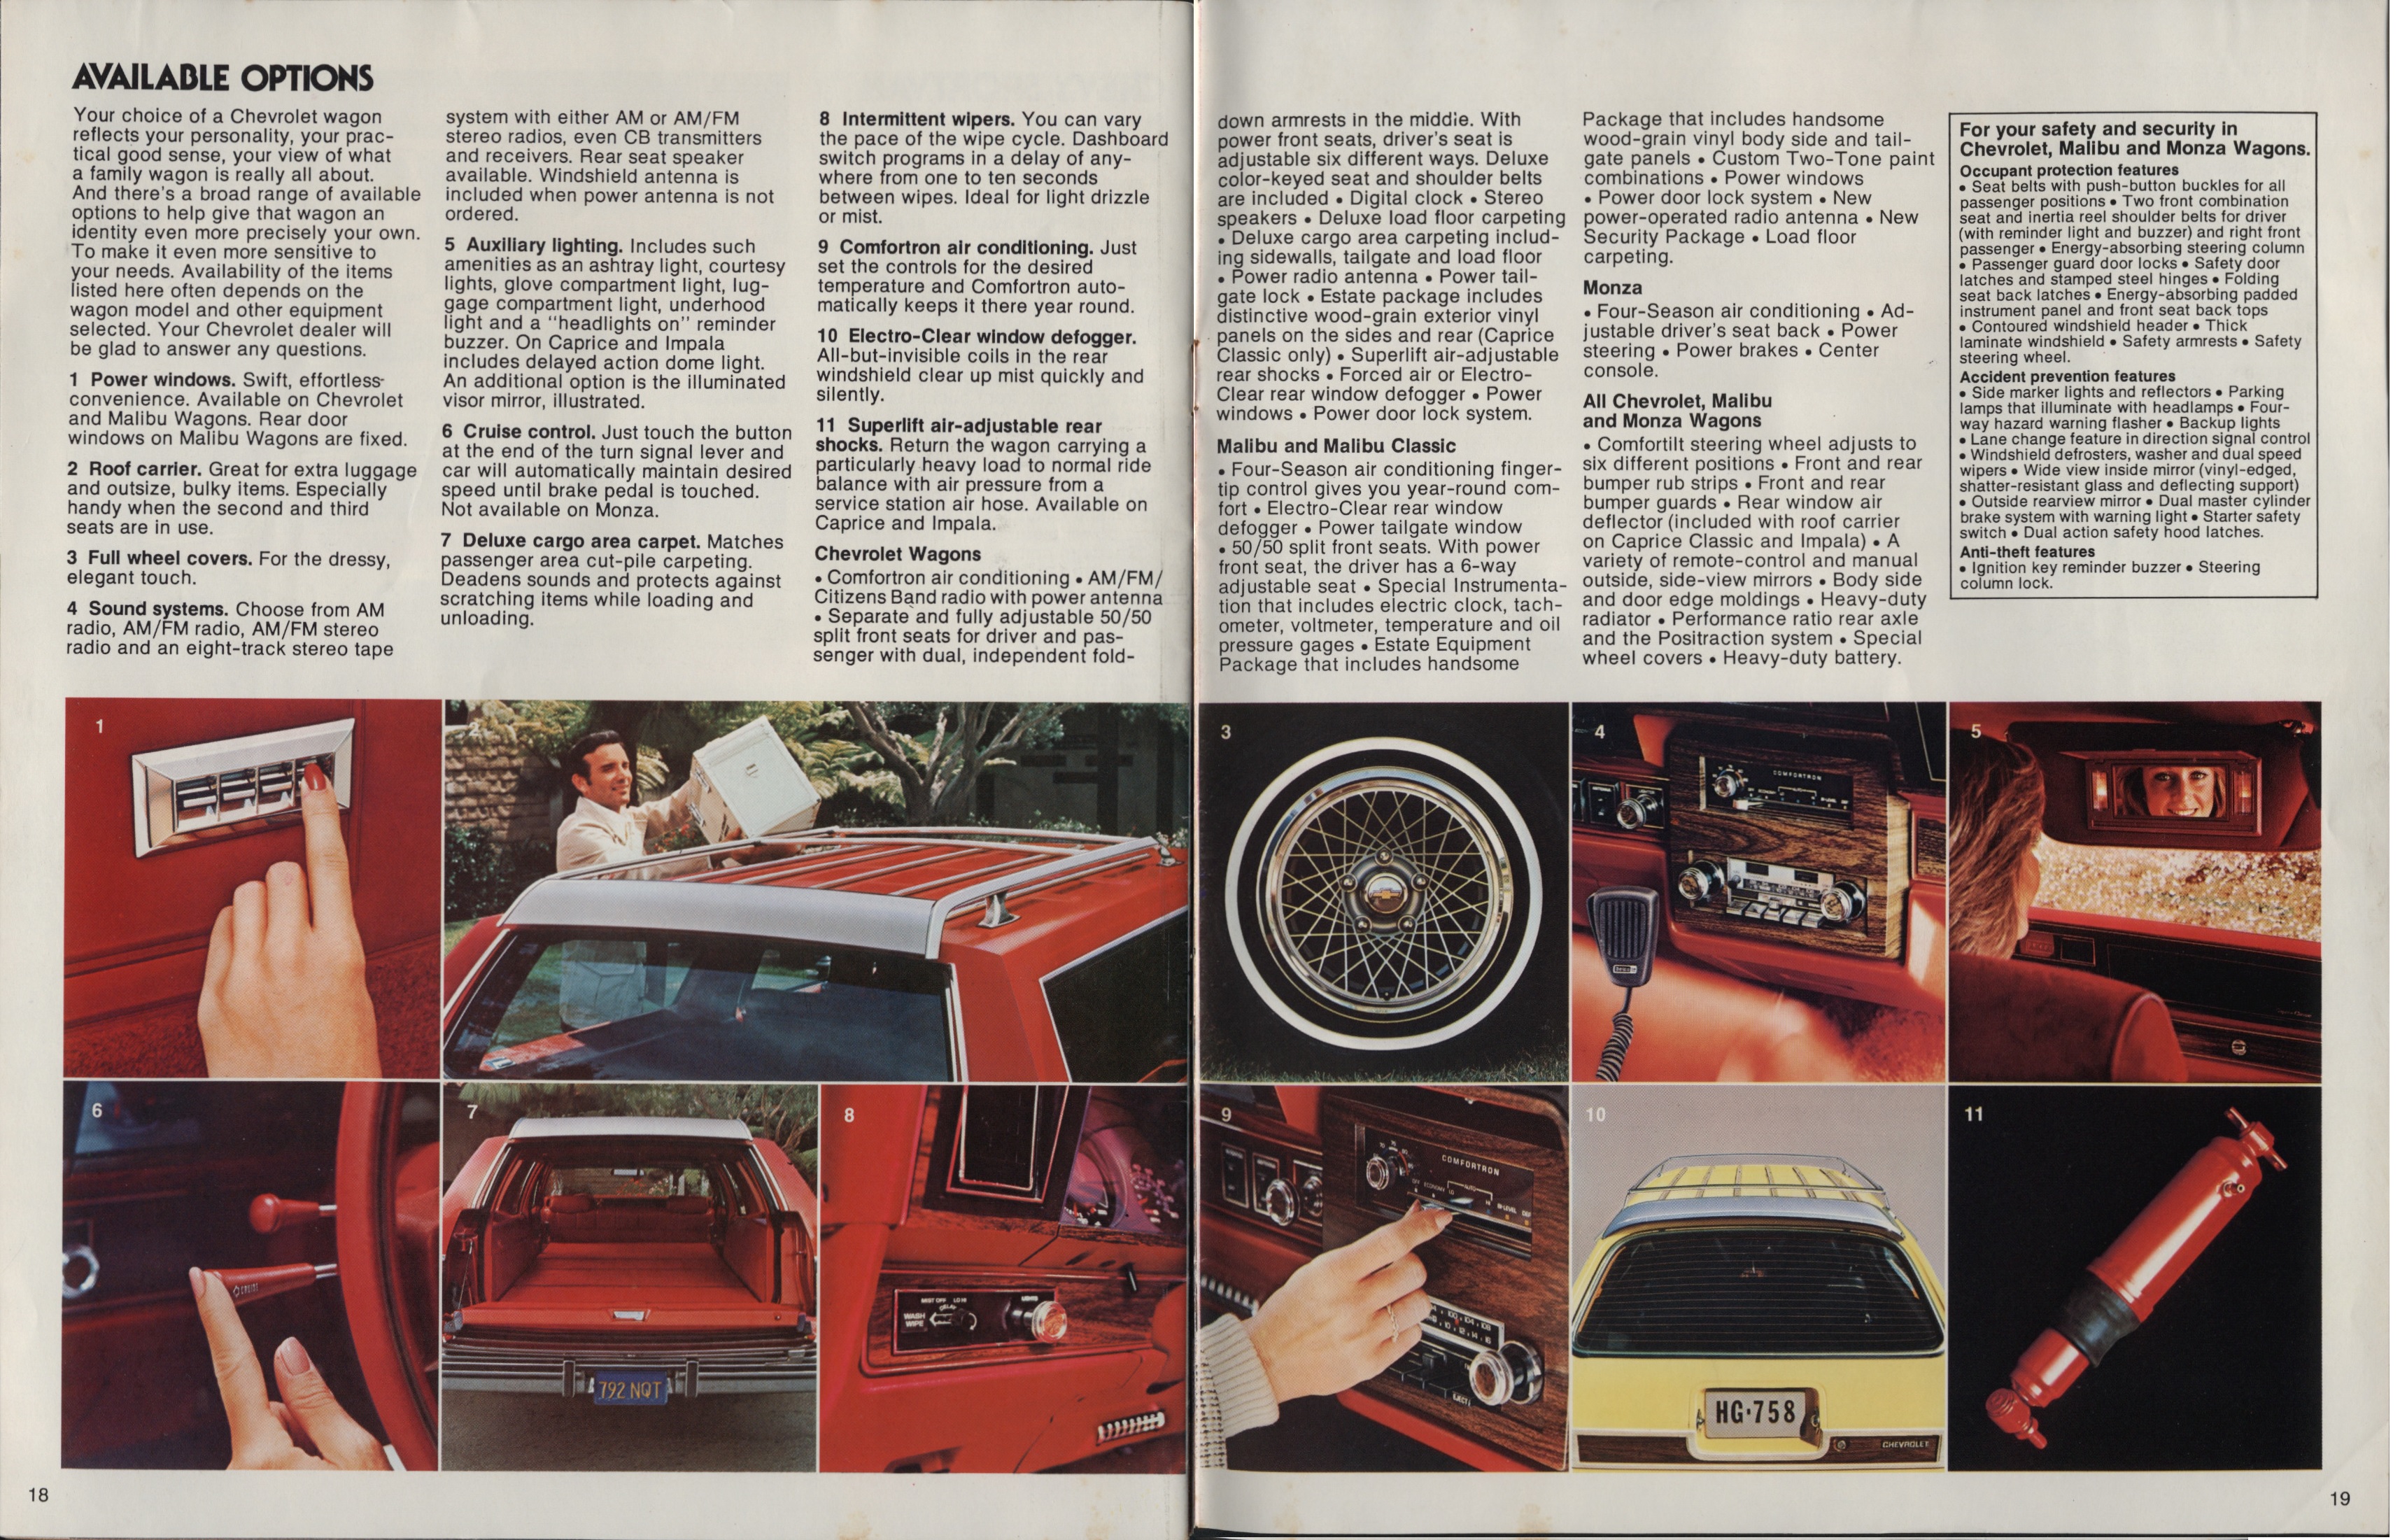 1978 Chevrolet Wagons Brochure 18-19